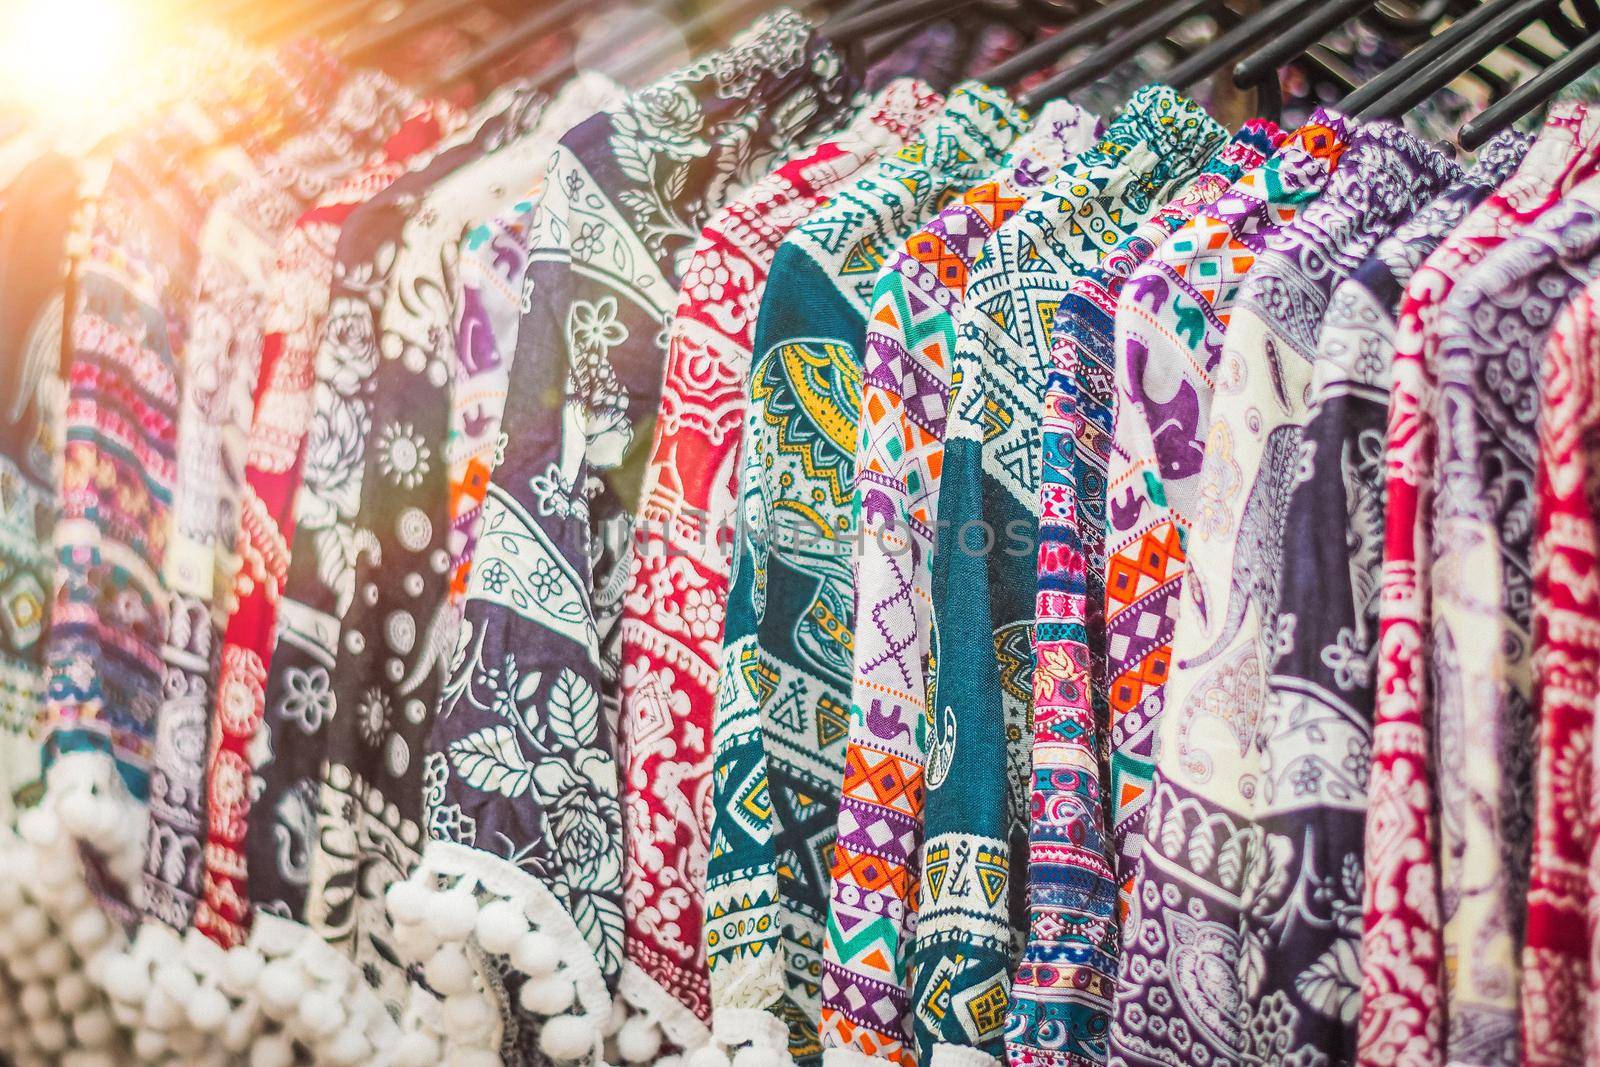 clothes hanging on a rack in a flea market Souvenir shop in Thailand